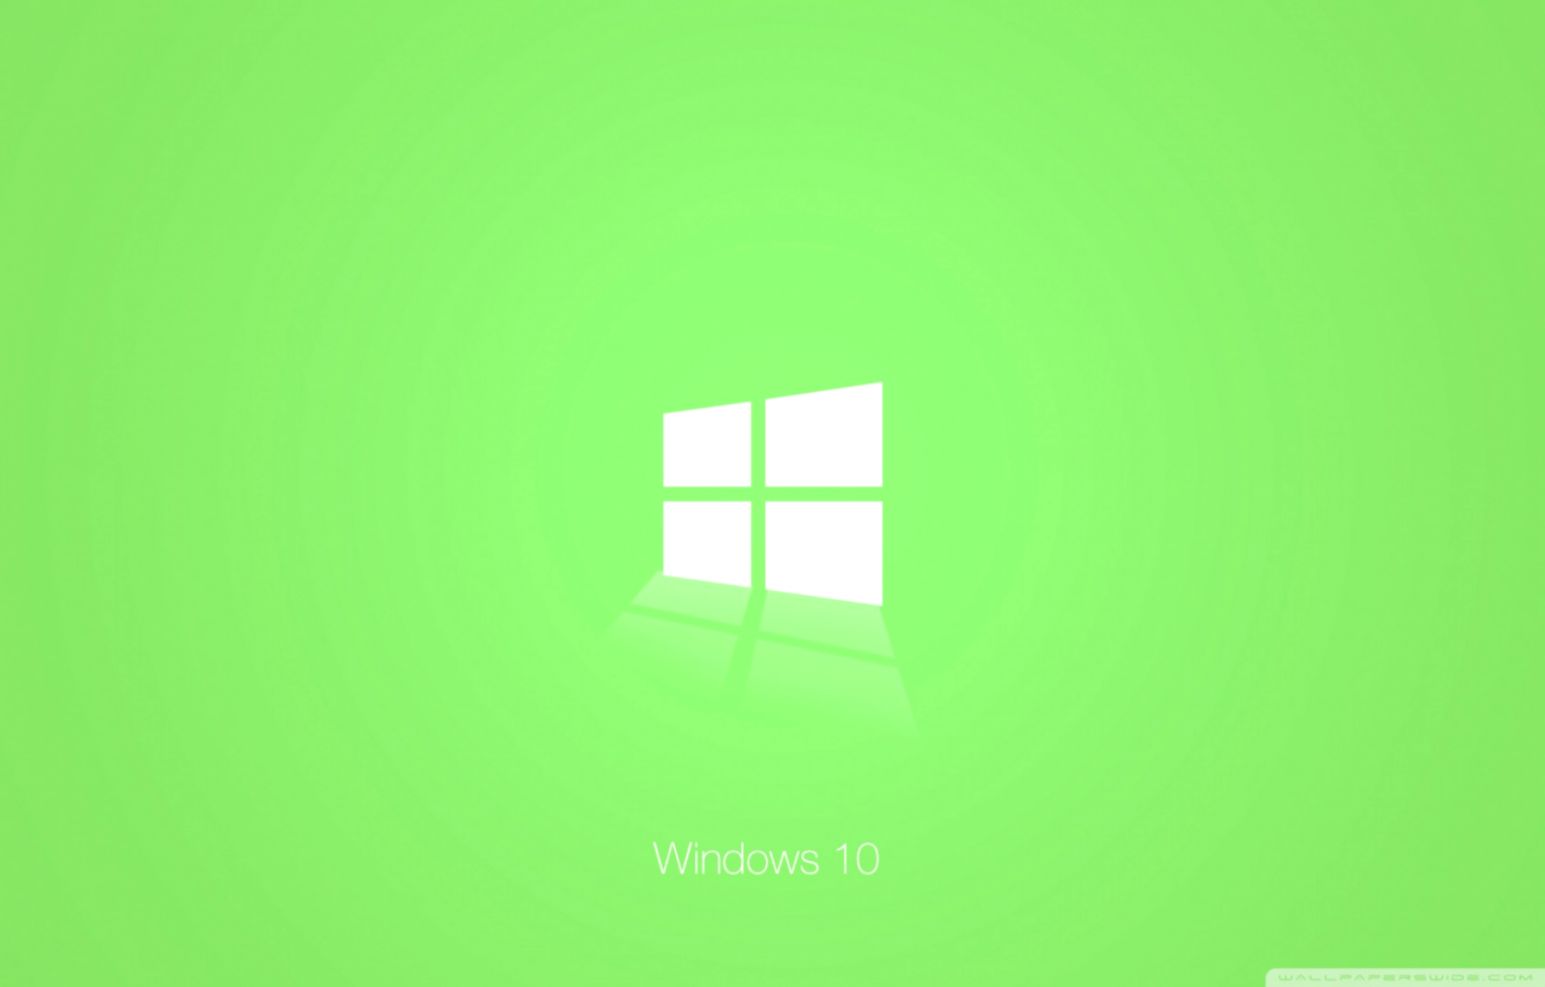 Windows 10 Green ❤ 4k Hd Desktop Wallpaper For 4k Ultra - Apple Wallpaper Windows 10 - HD Wallpaper 